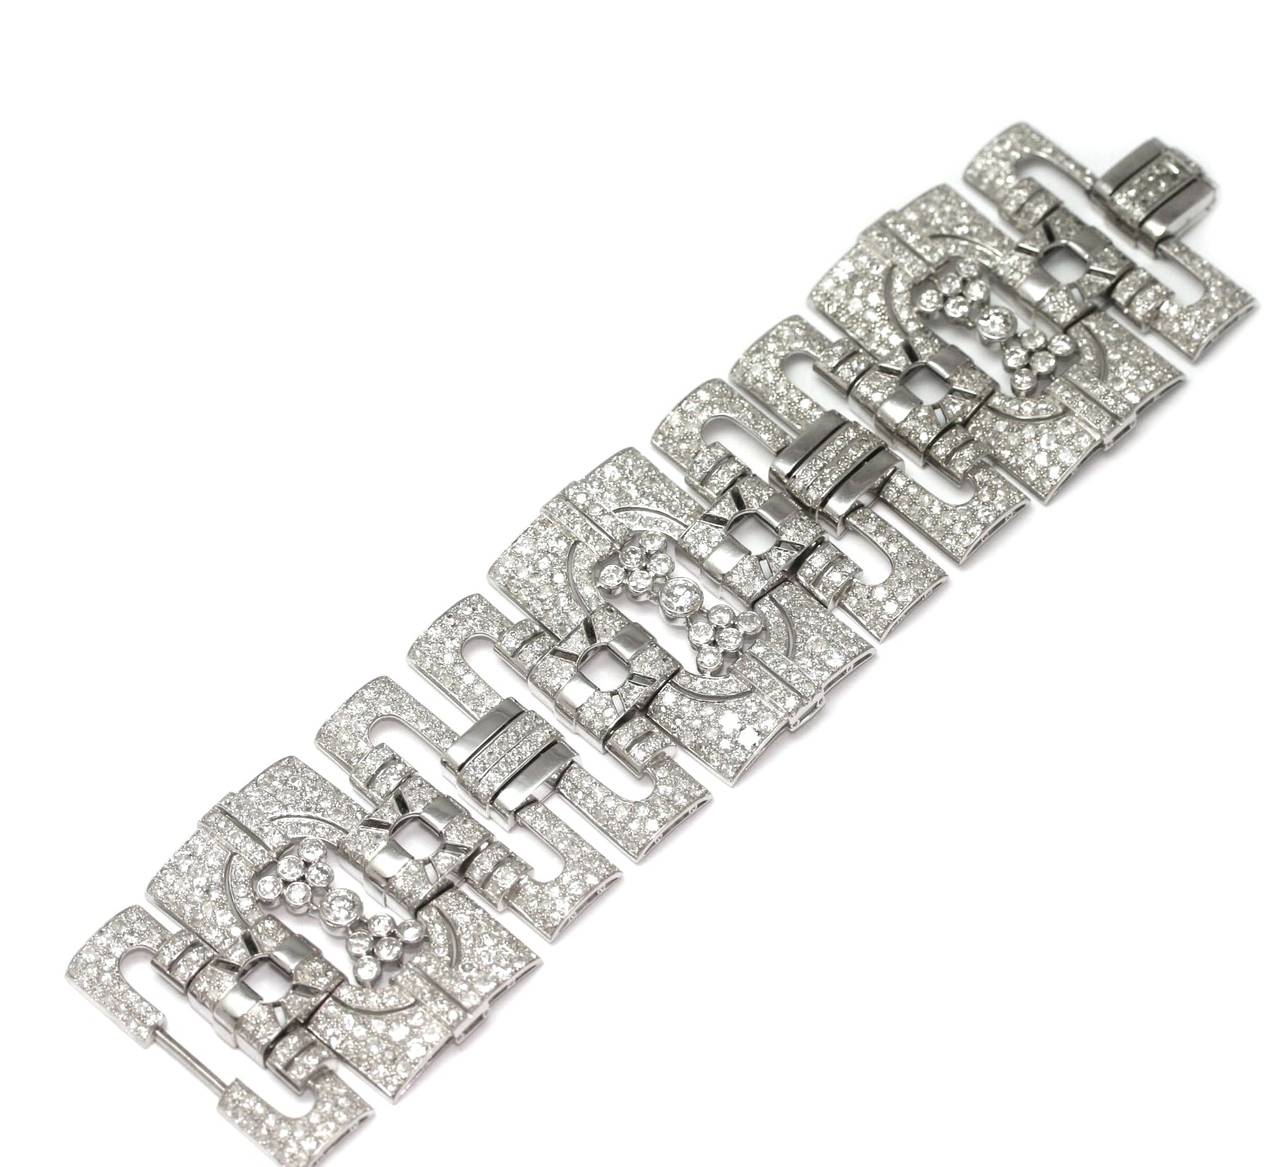 Circa 1930 Bracelet in platinum set with 38 carats of round cut diamonds, 185mm (99 grams)